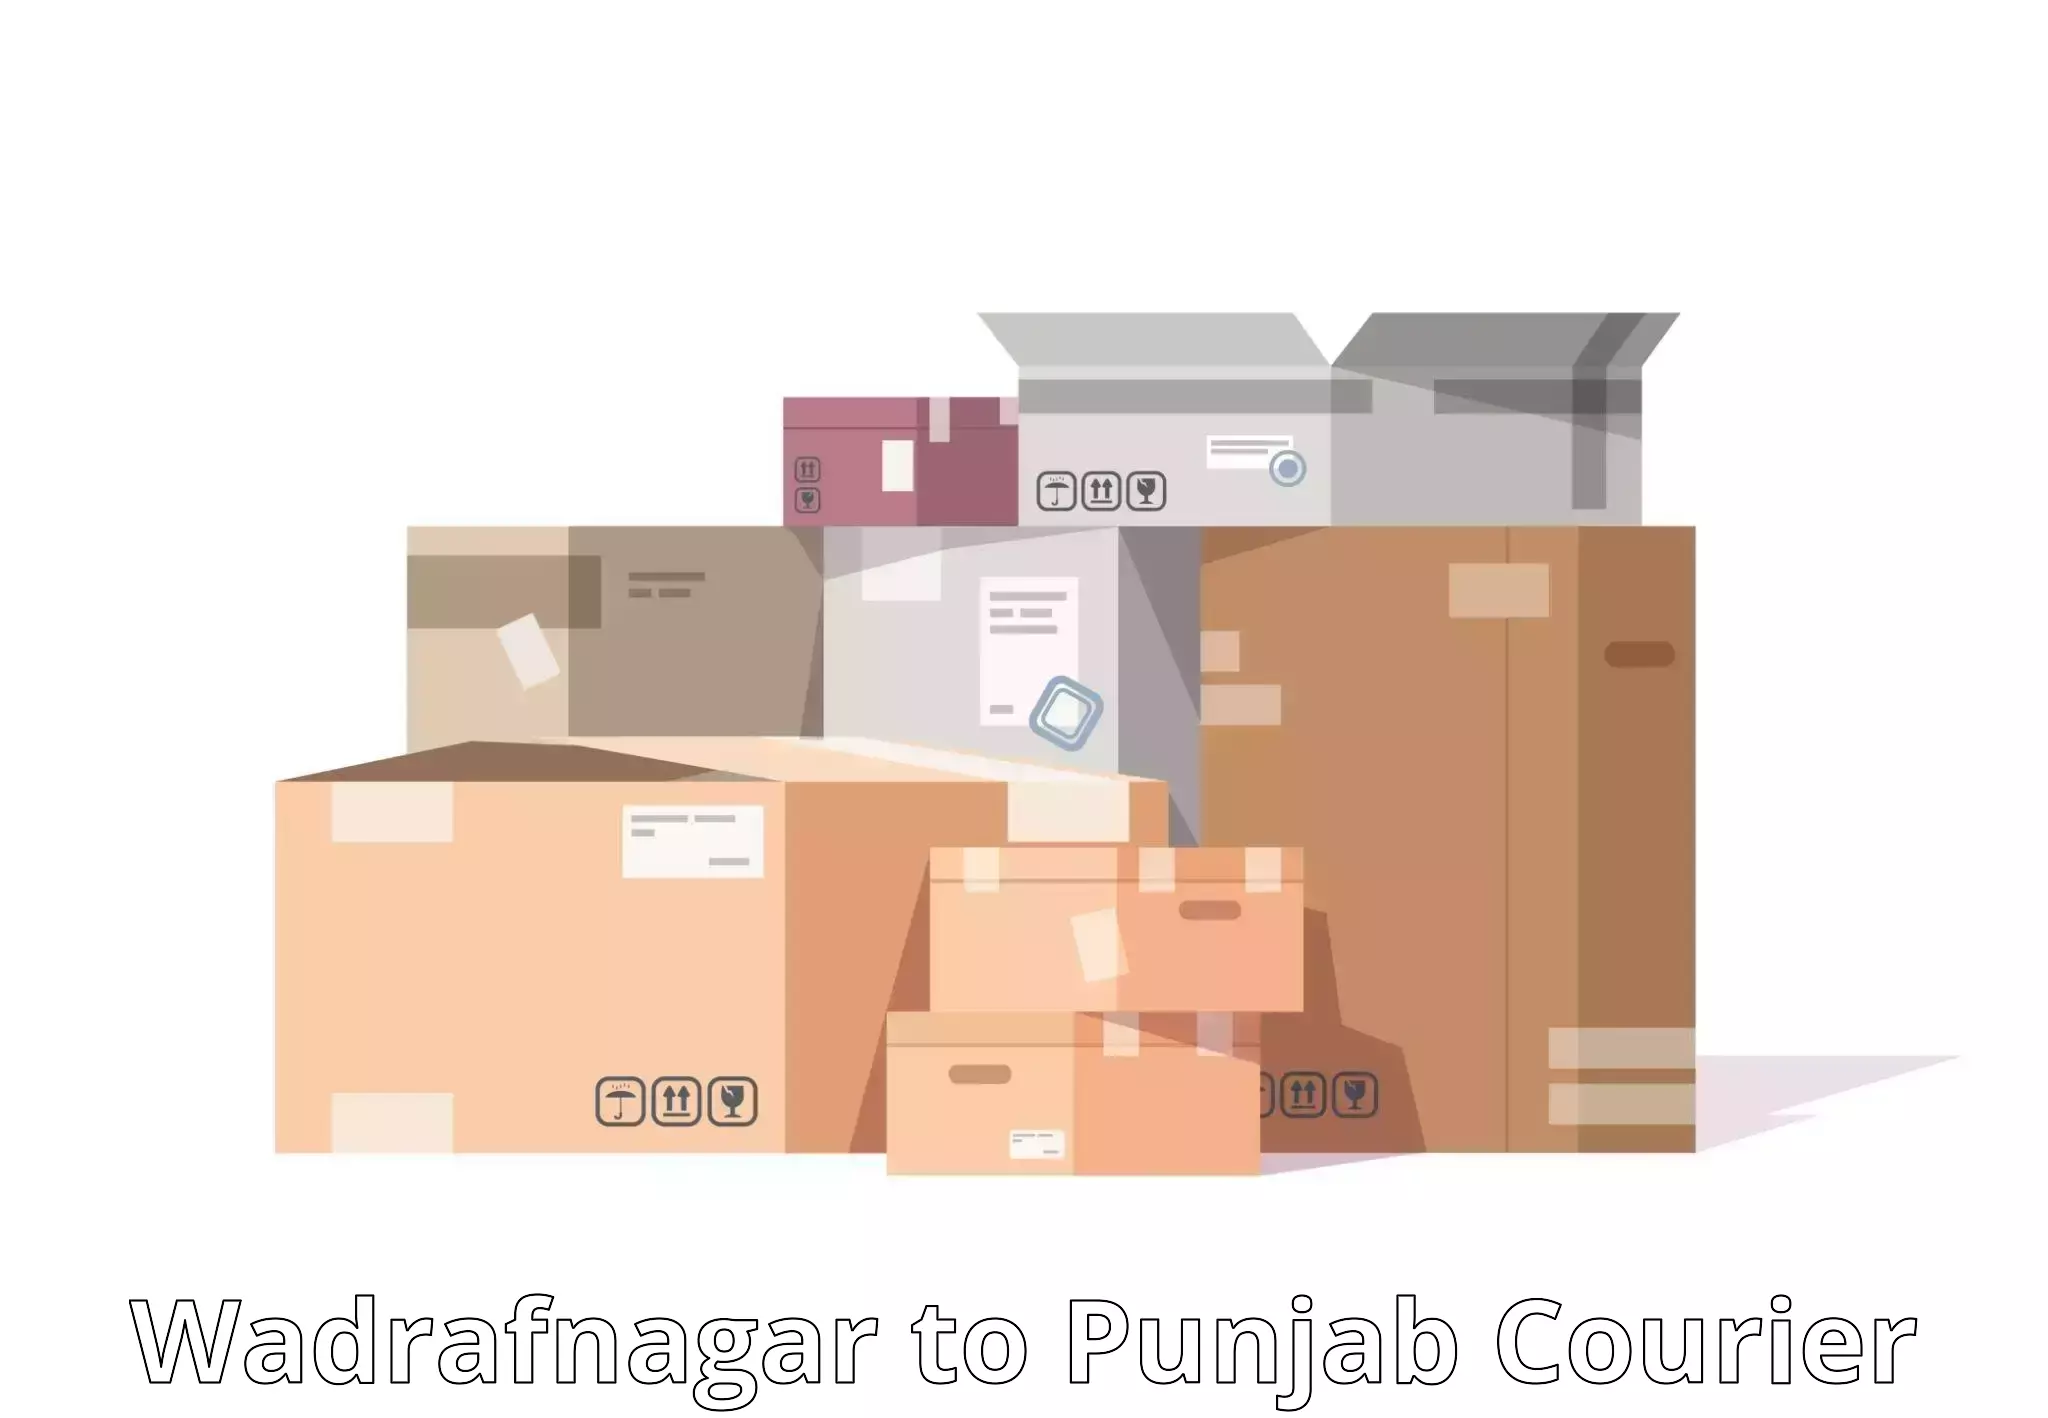 Efficient freight transportation Wadrafnagar to Fatehgarh Sahib